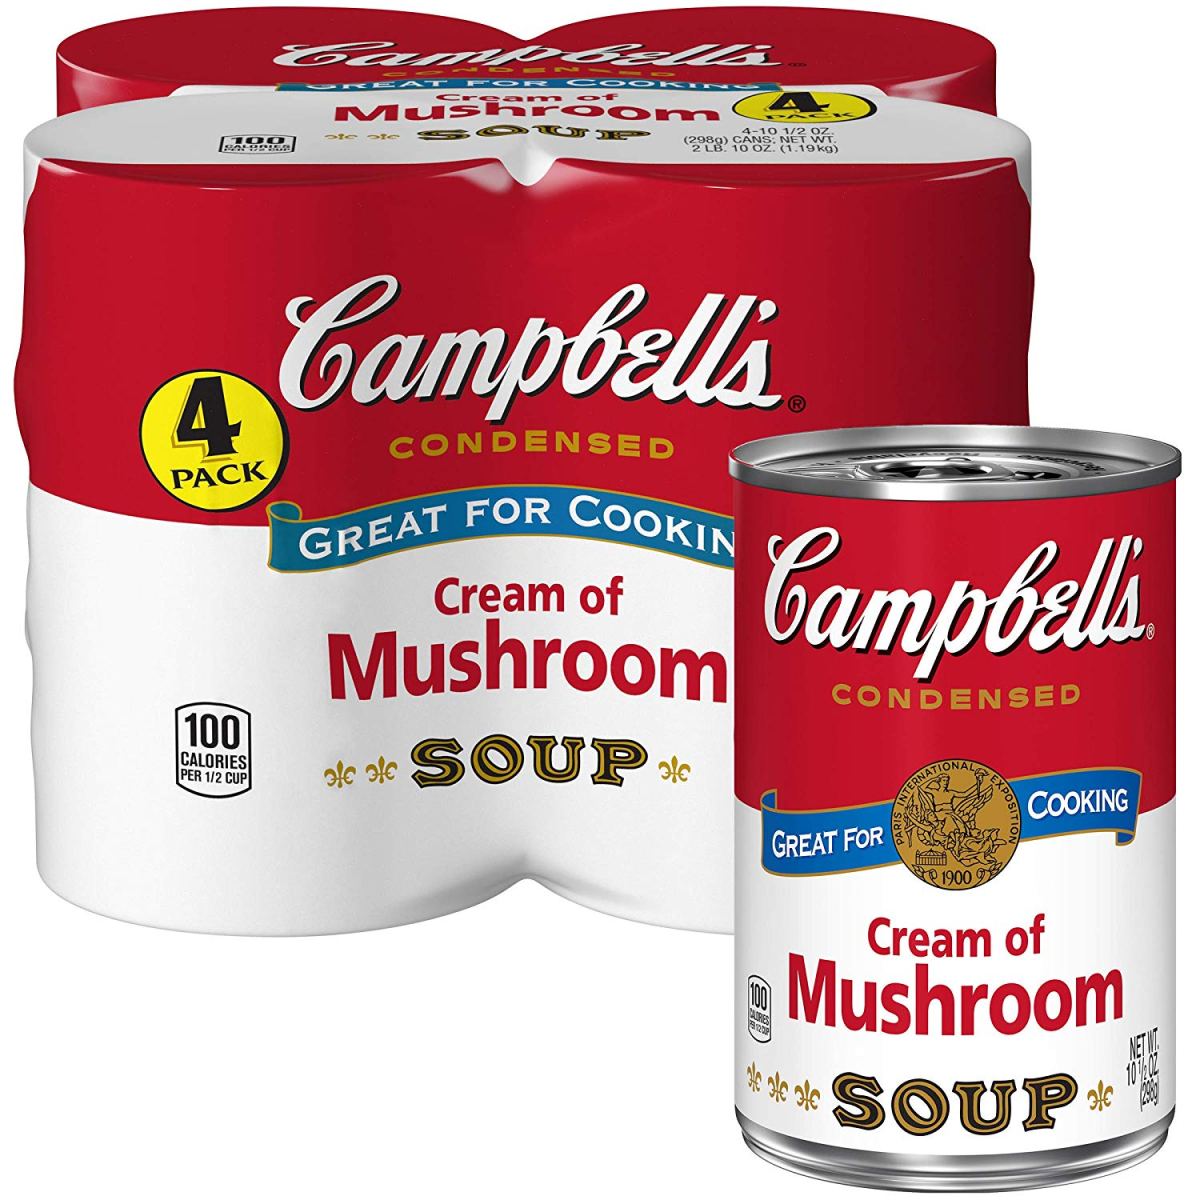 Campbellâs Condensed Cream of Mushroom Soup, 10.5 oz. Can ...